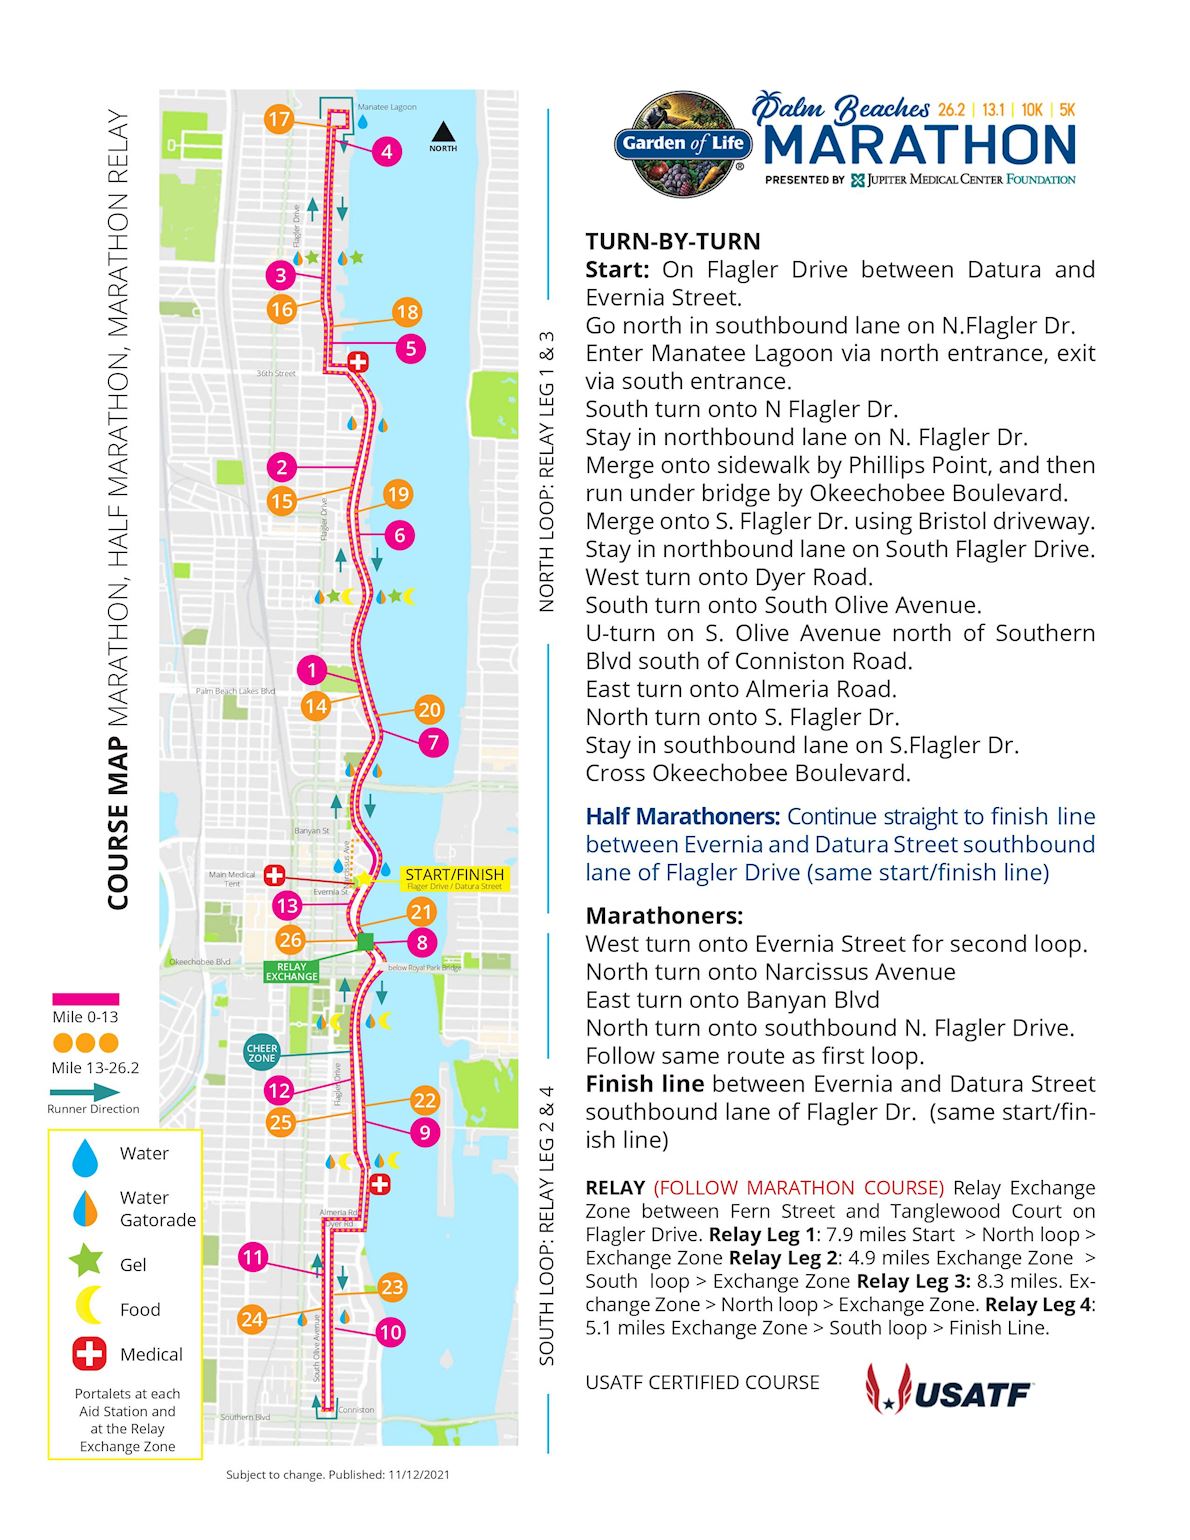 Garden of life Palm Beaches Marathon Route Map